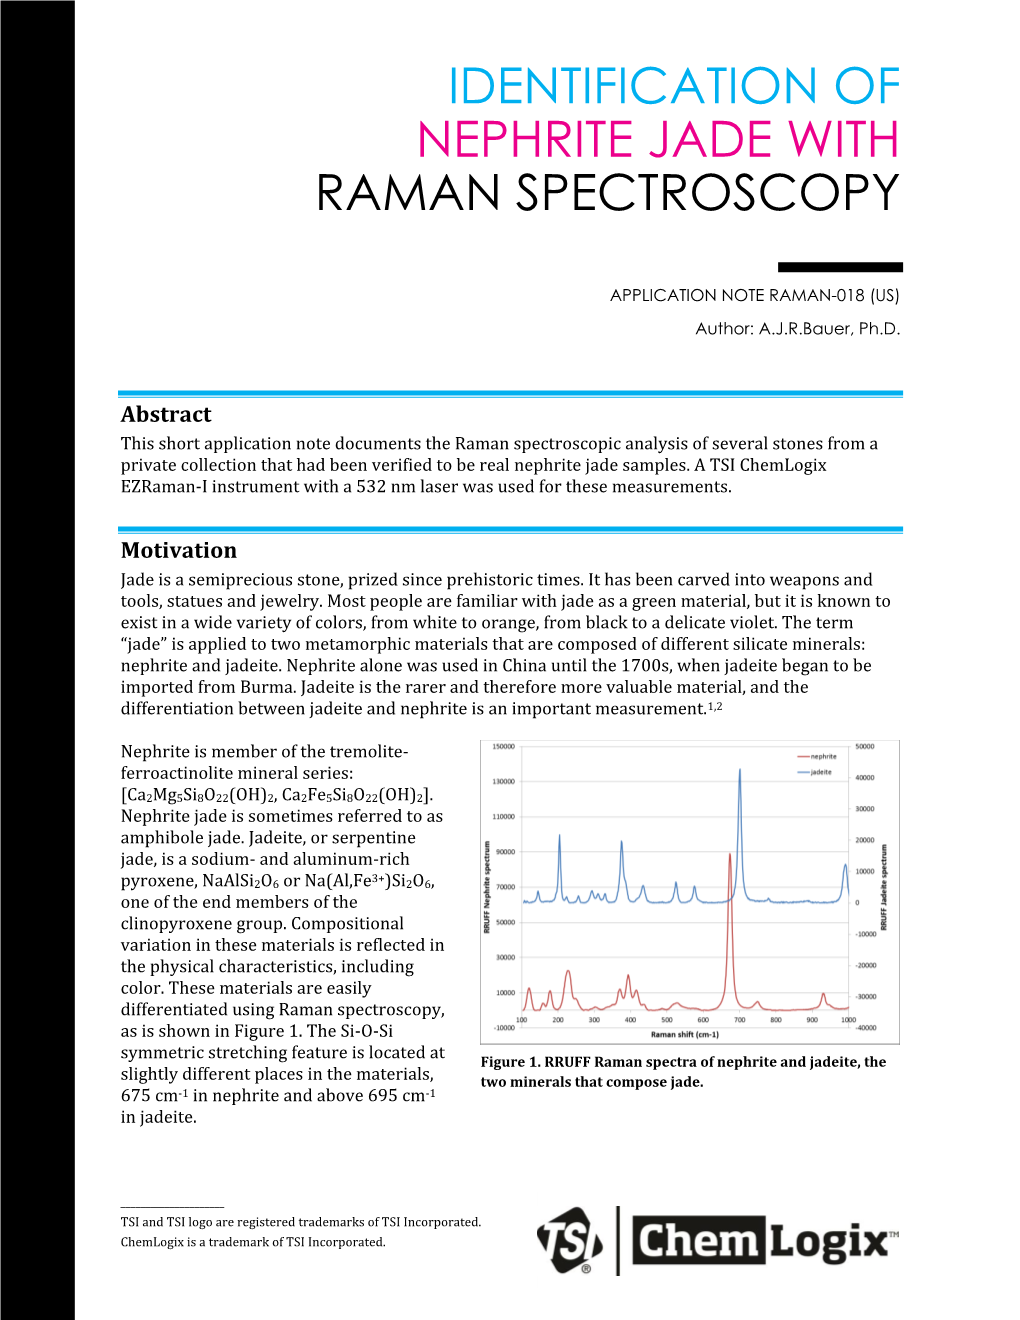 Identification of Nephrite Jade with Raman Spectroscopy App Note